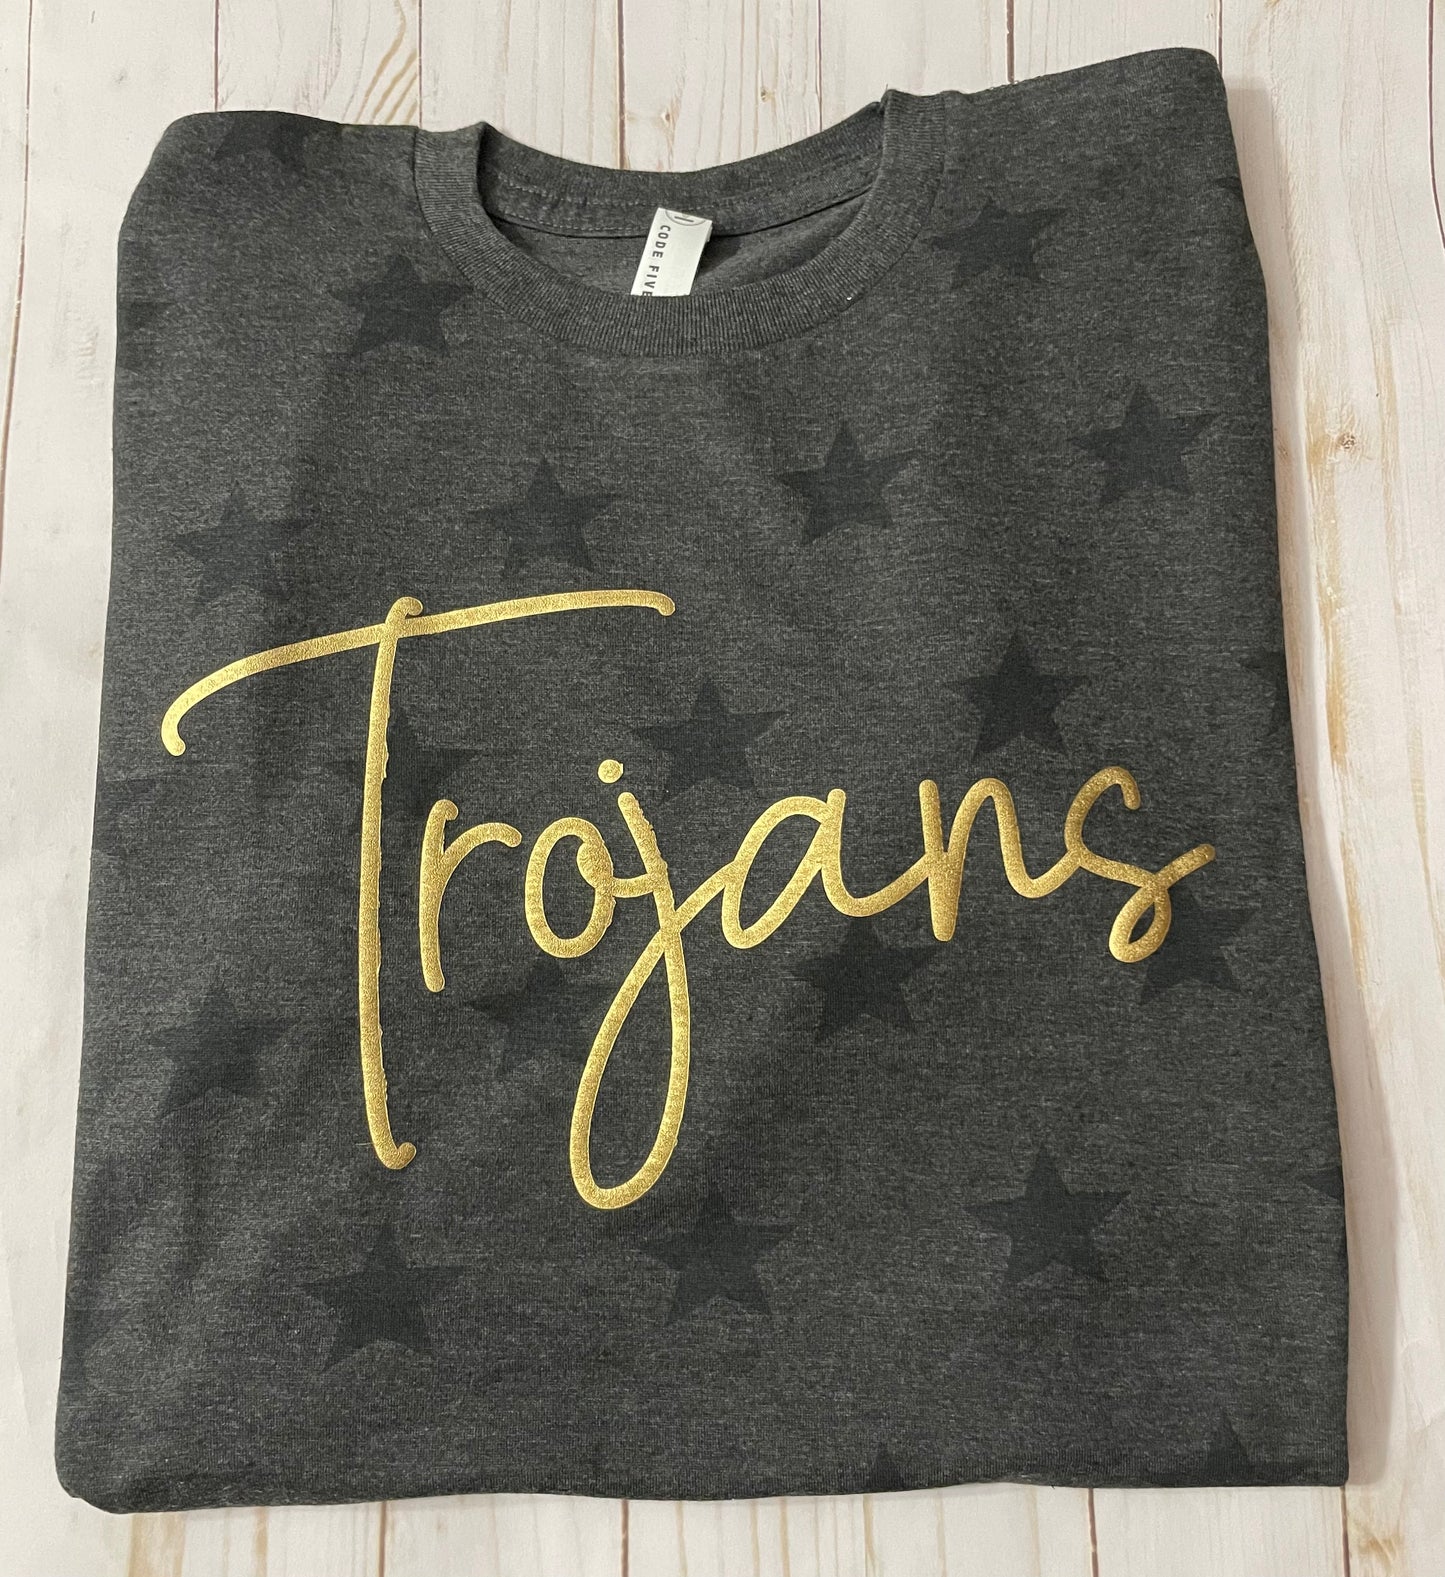 Trojans shirt